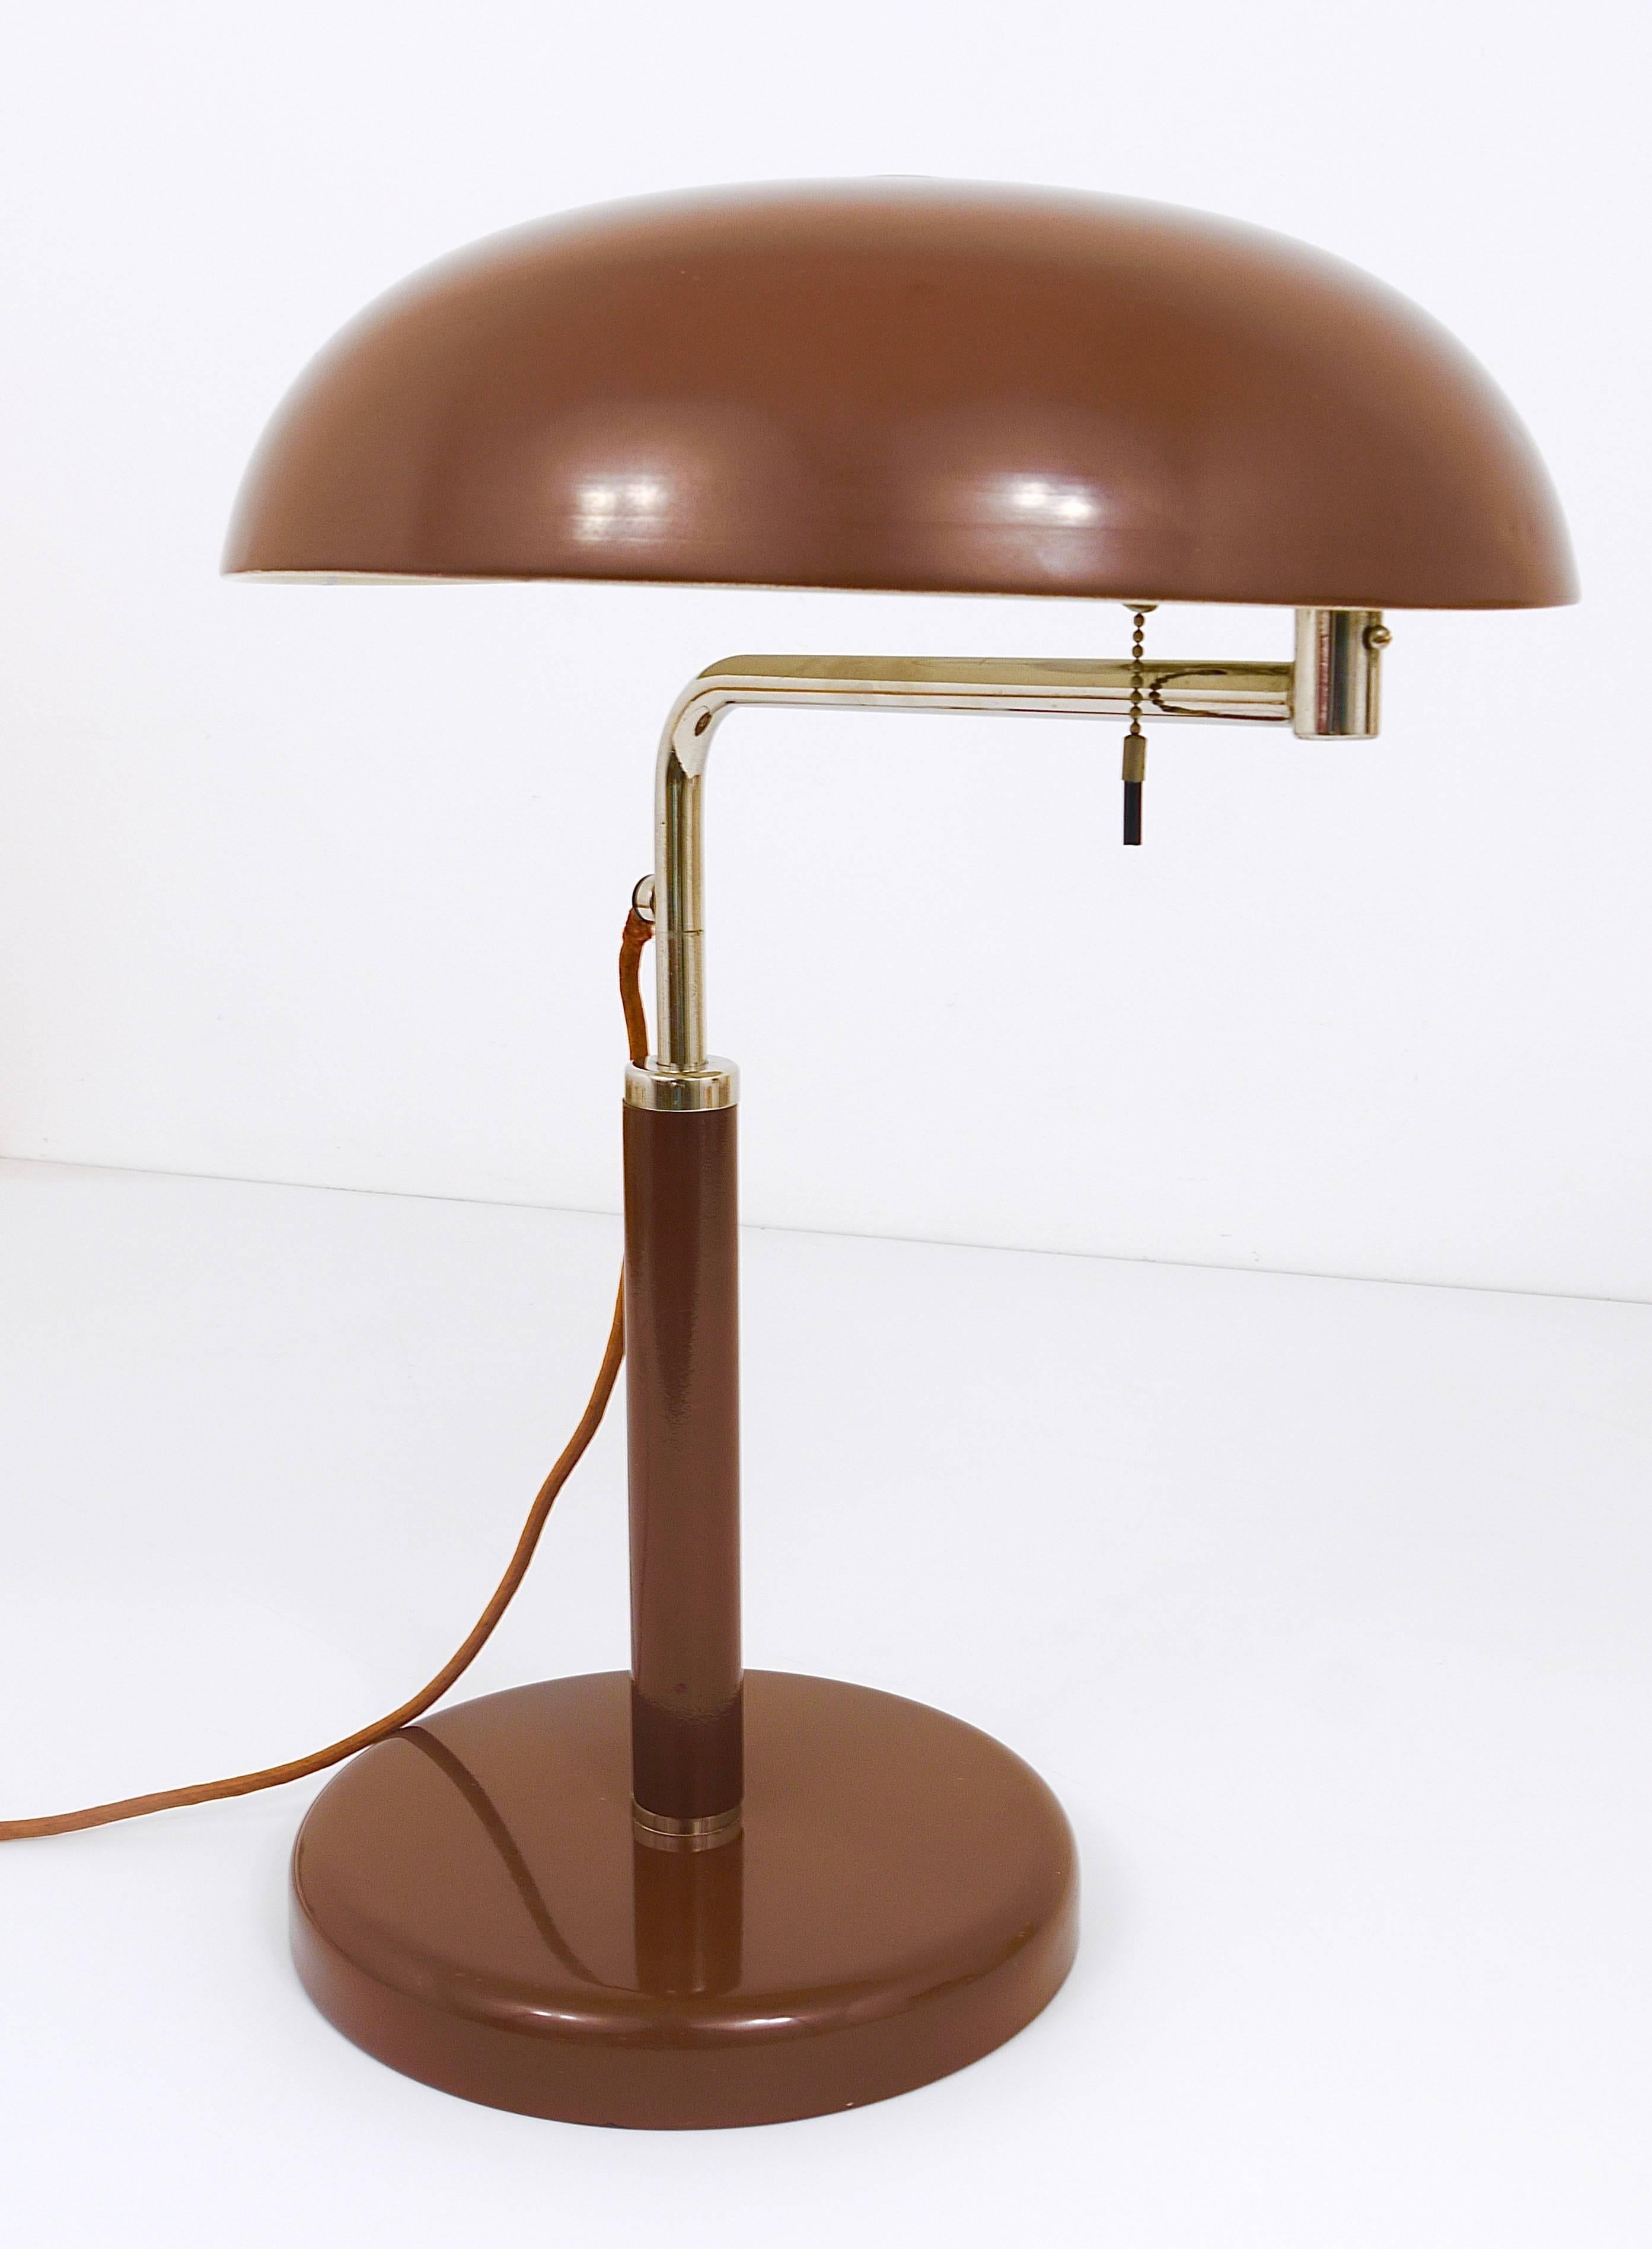 Swiss Brown BAG Turgi Bauhaus Desk Lamp by Alfred Muller, Switzerland, 1930s